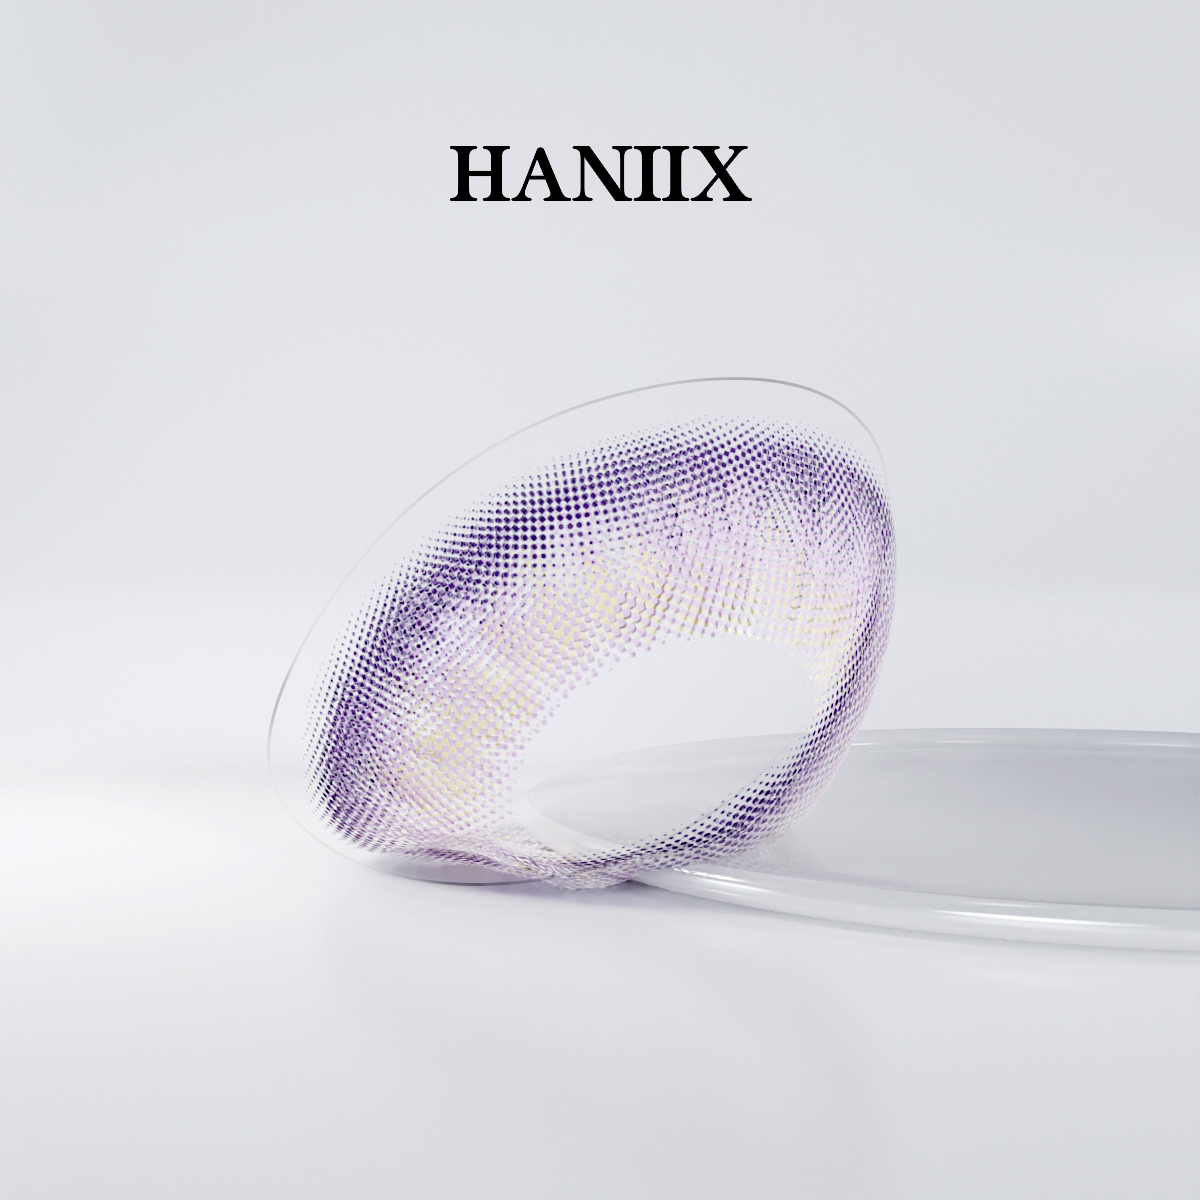 DNA Taylor Violet - Yearly, 2 lenses - HANIIX